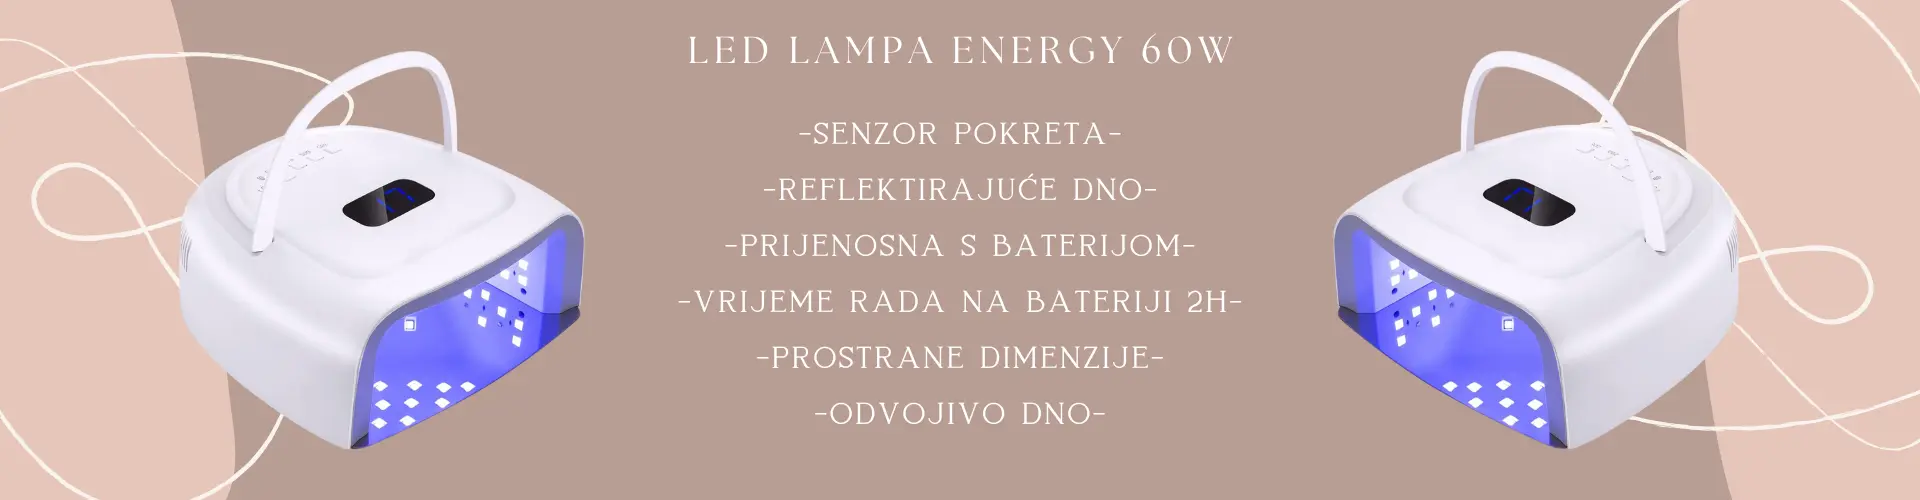 LED lampa energy 60w